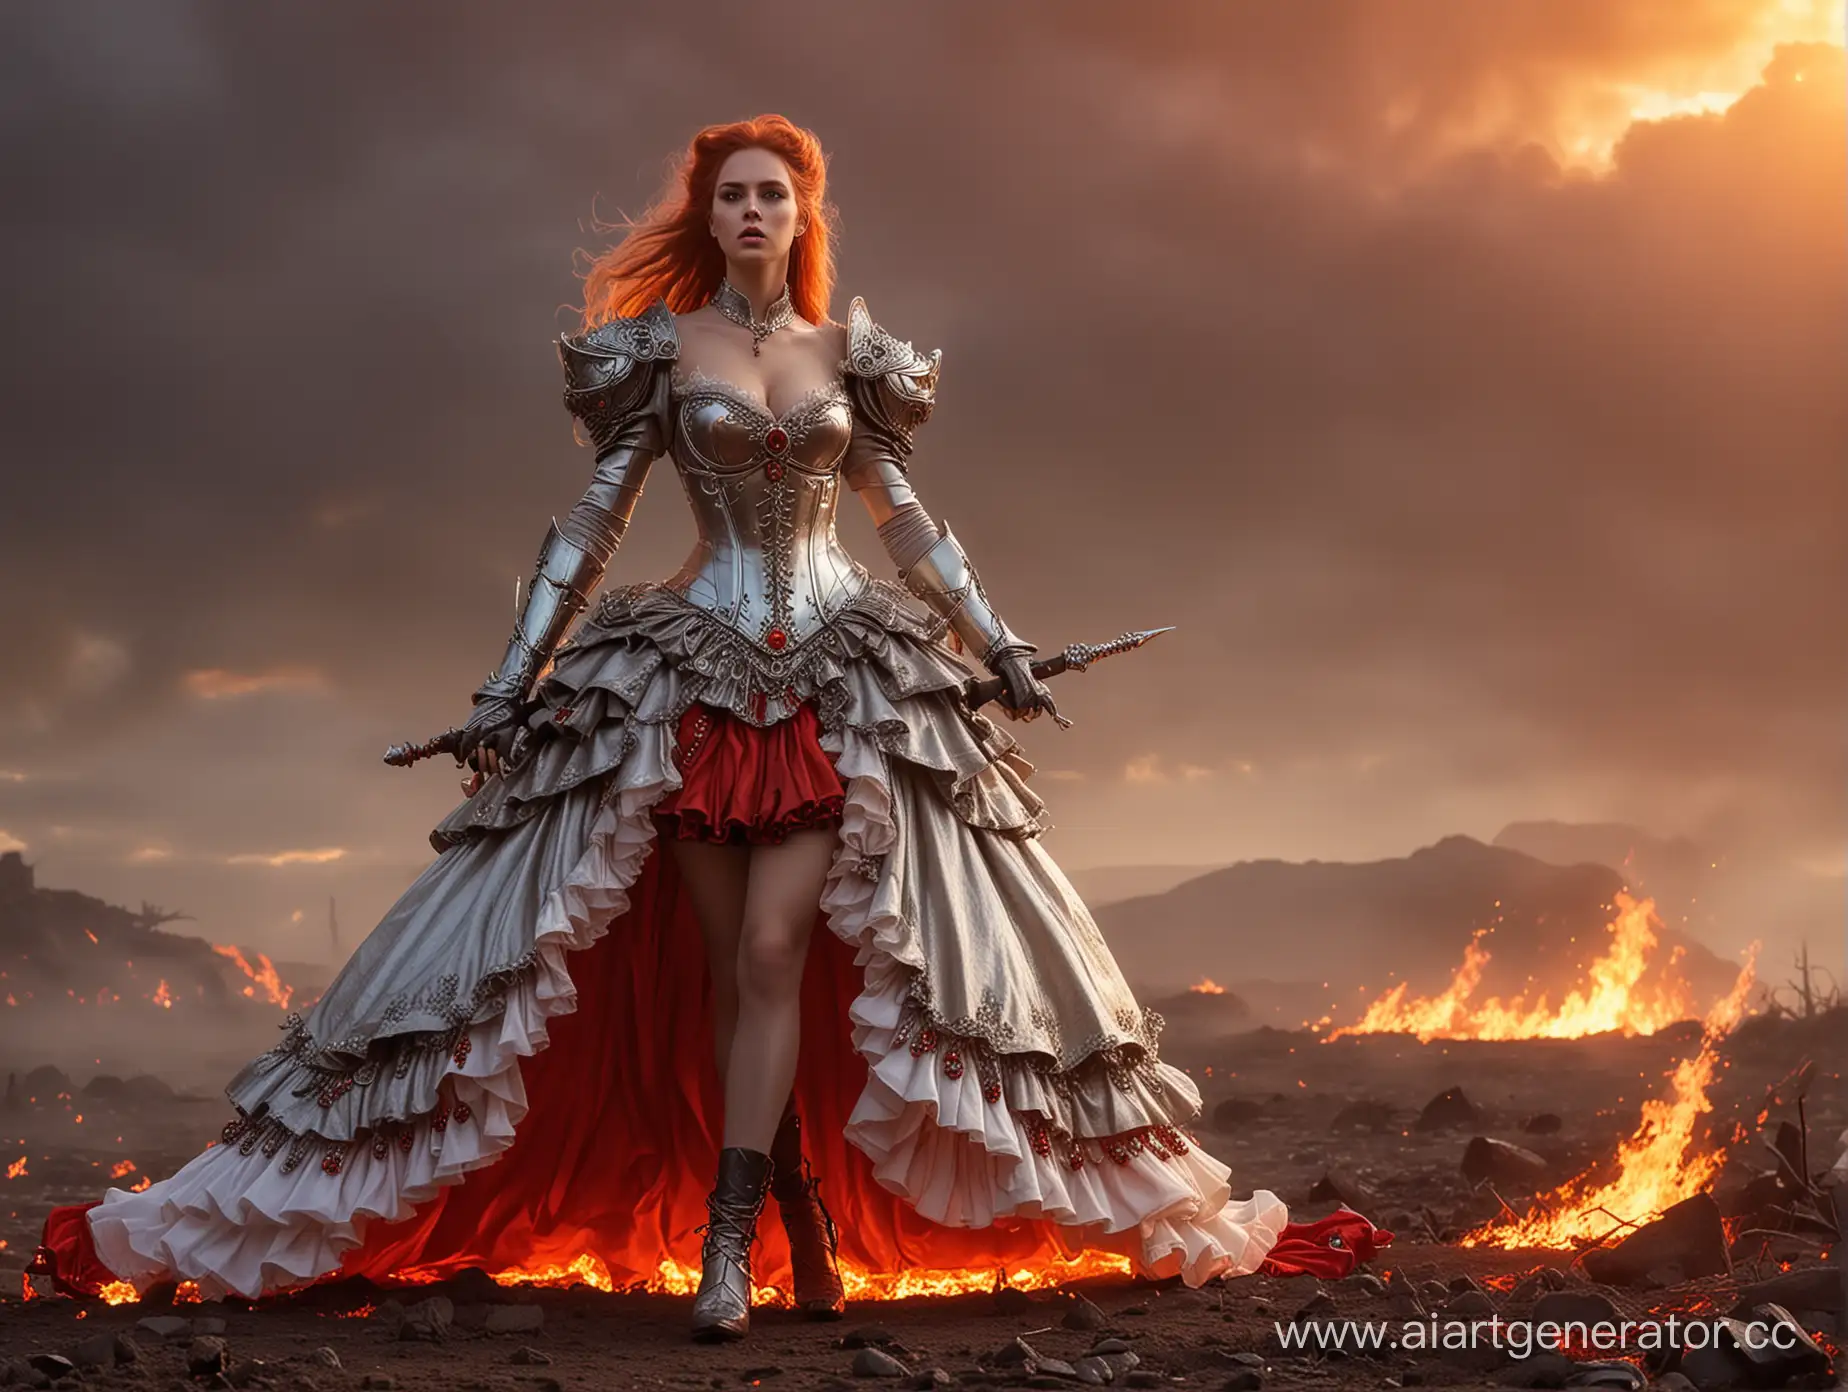 Fiery-Warhammer-Fantasy-Battle-Maiden-in-Steel-Armor-and-Crinoline-Skirt